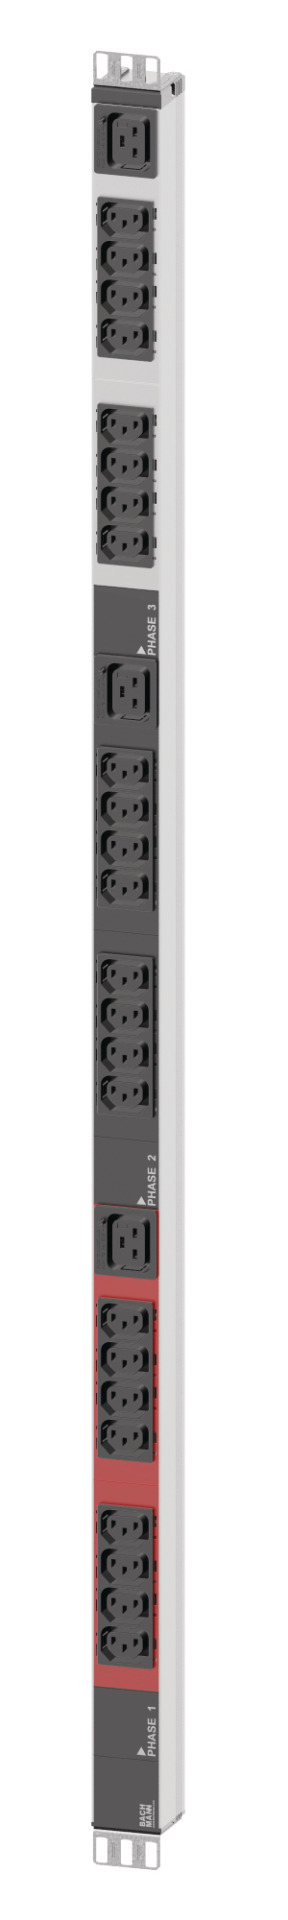 Socket Strip Vertical, 24 x C13 + 3 x C19, 3-Phase, Plug CEE 16 A red